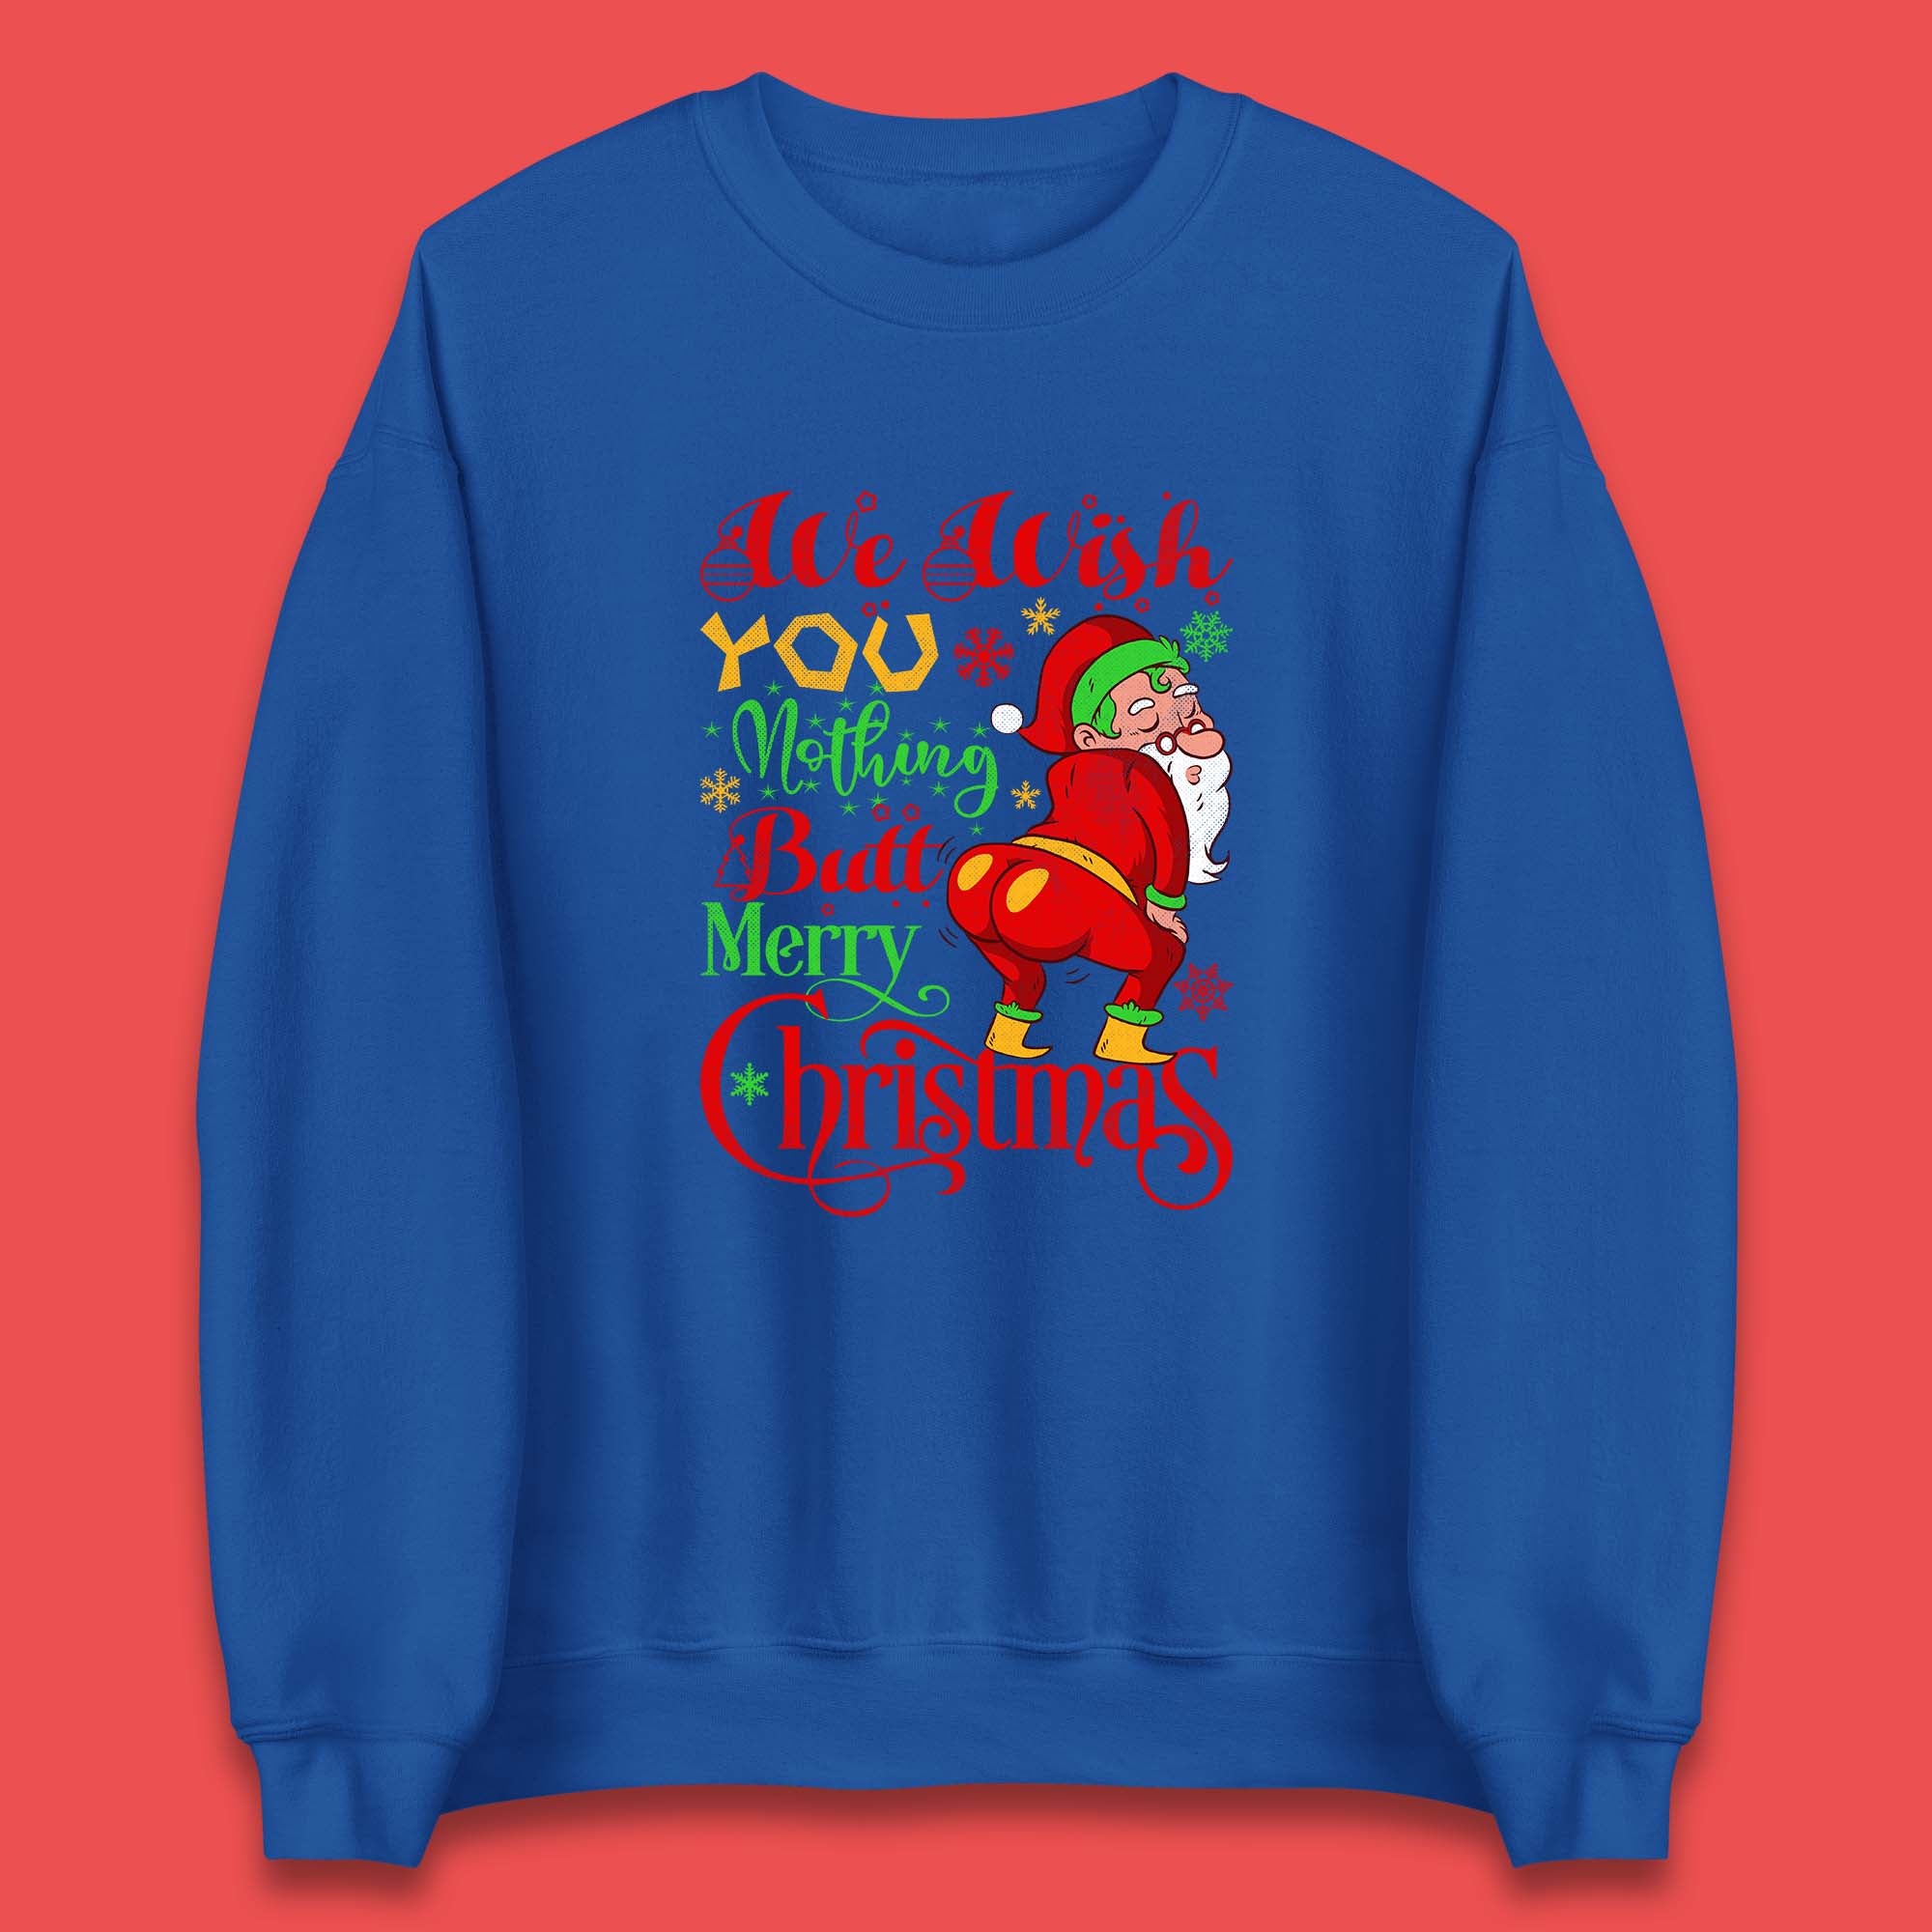 We Wish You Nothing Butt Merry Christmas Funny Naughty Santa Claus Xmas Unisex Sweatshirt